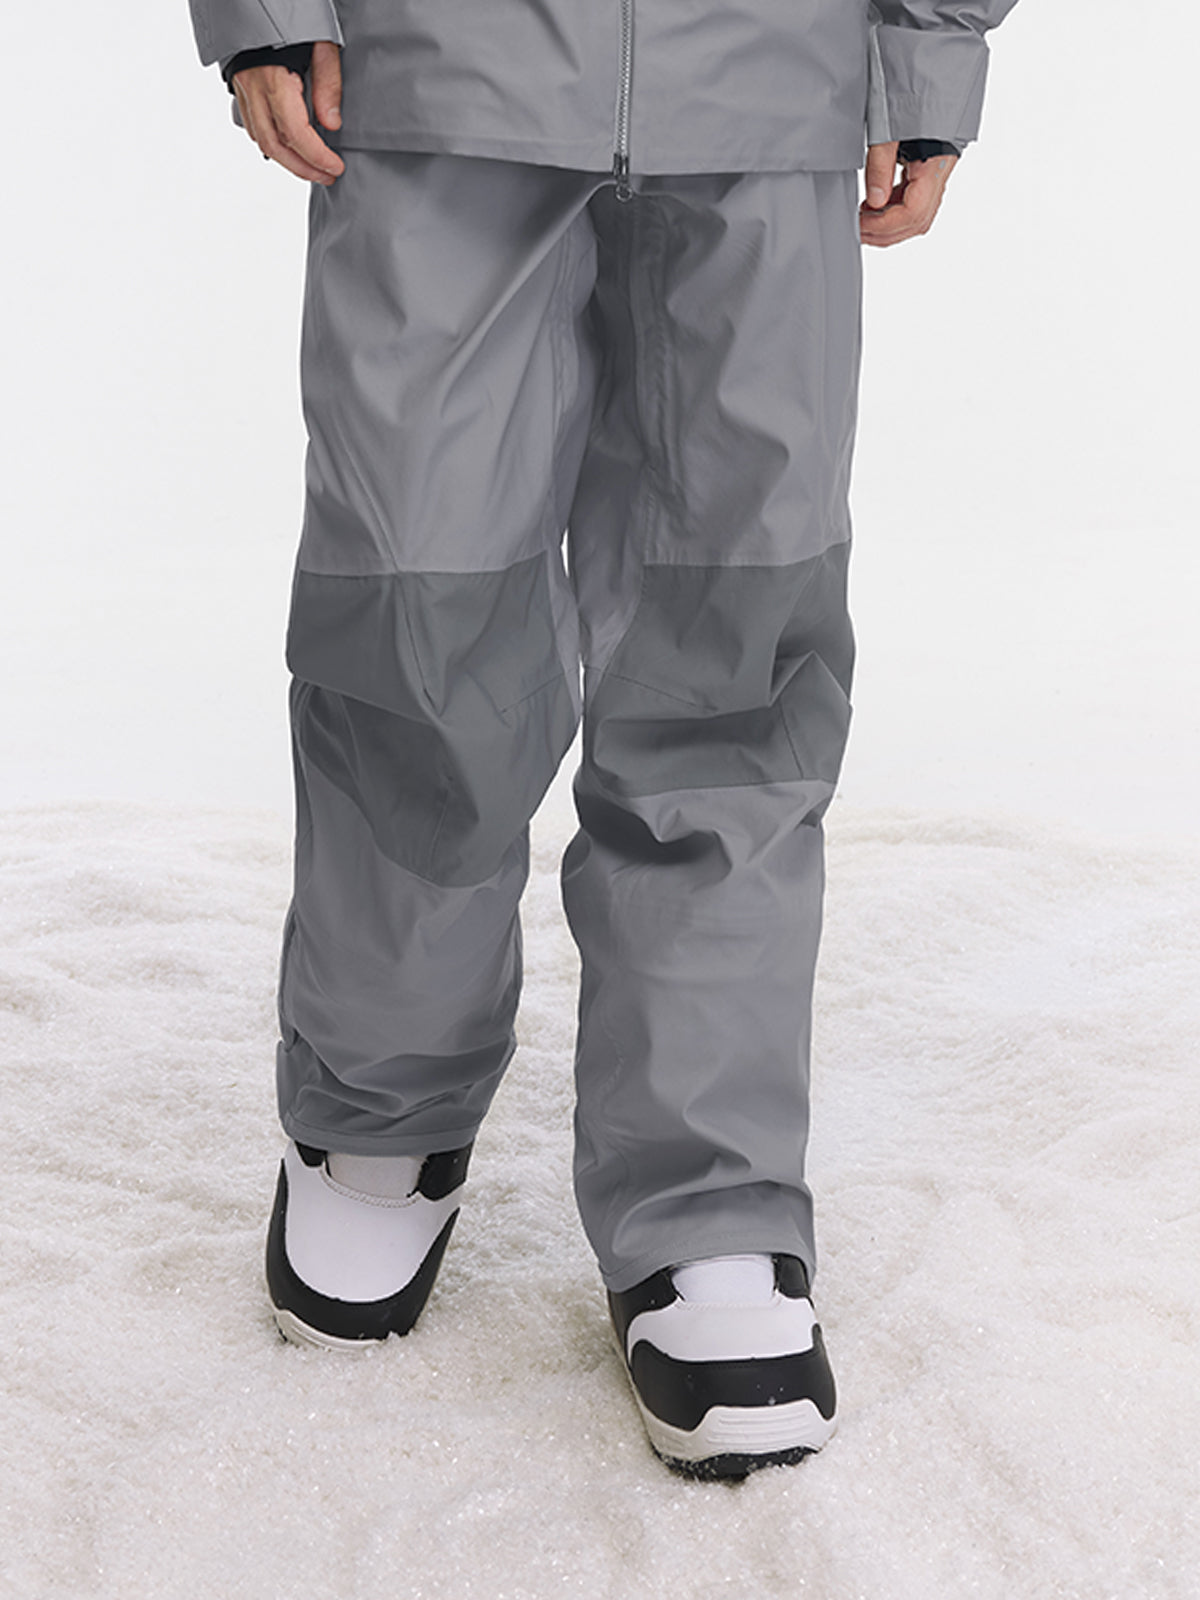 Vector Men's 3L Ski & Snowboard Pants Snow Pants Snowshell Dermizax Waterproof Winter Clothes Outfit